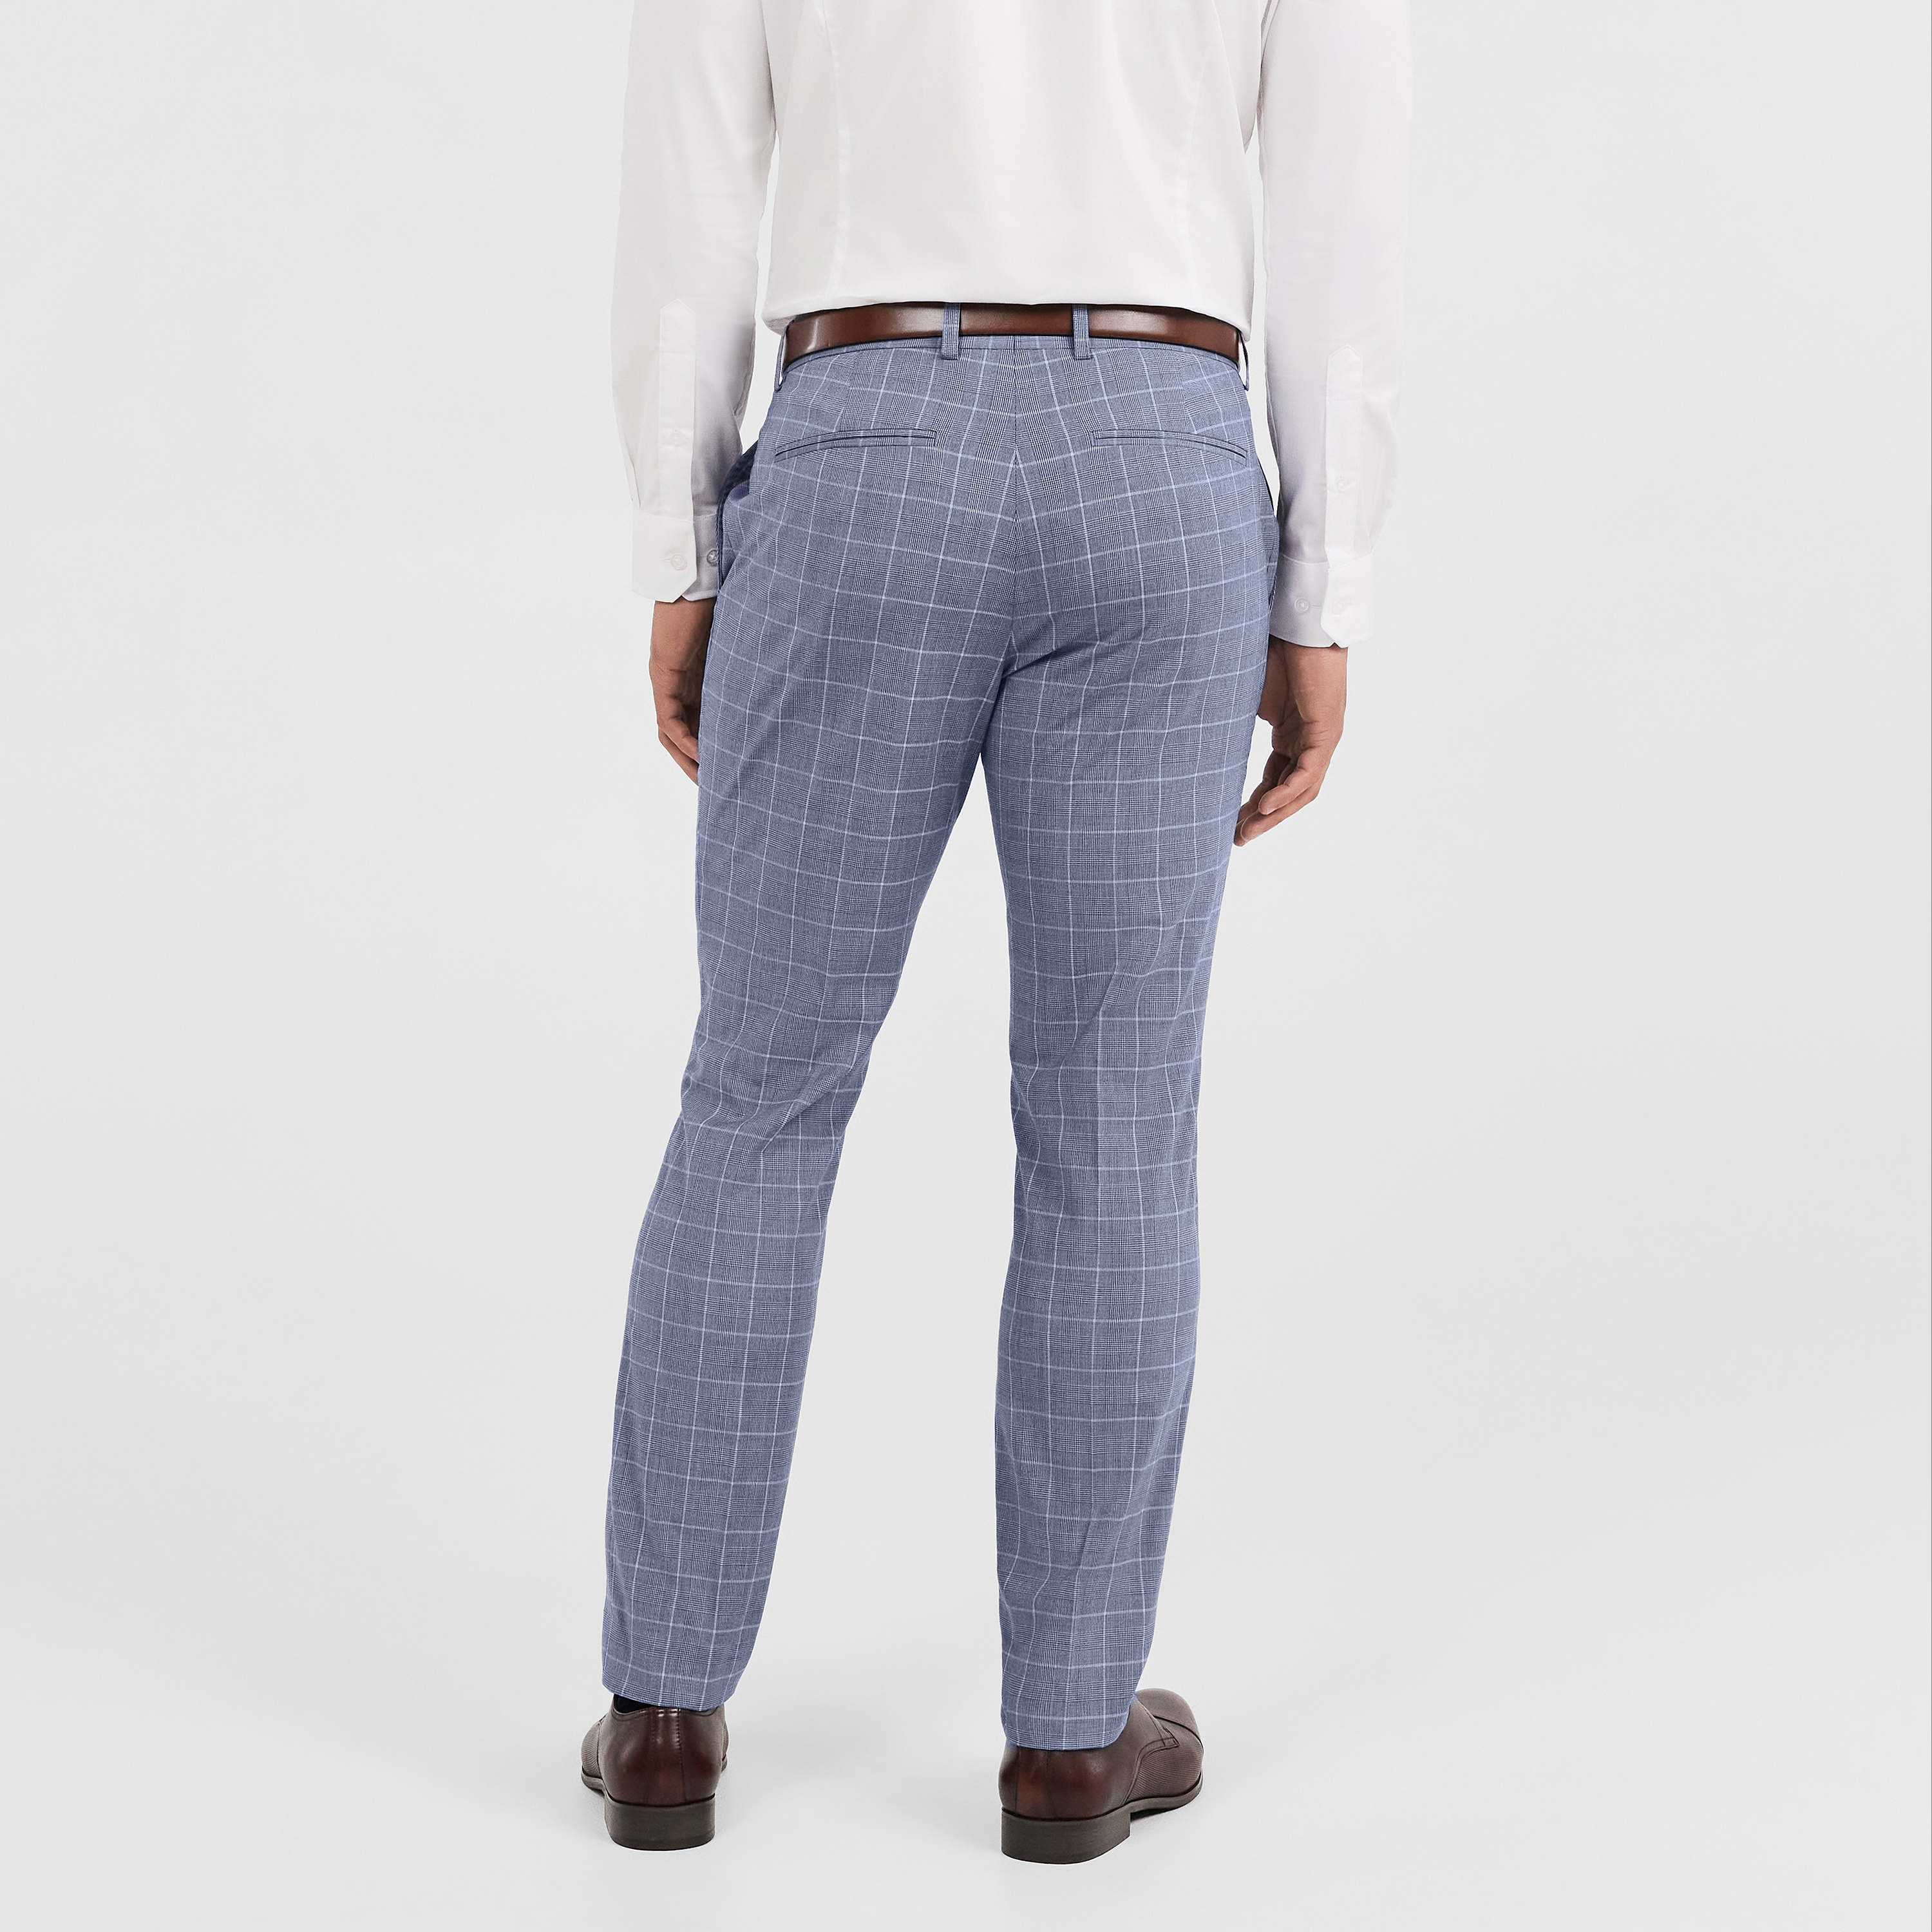 White M MEN FASHION Trousers Skinny Dustin slacks slim discount 76% 